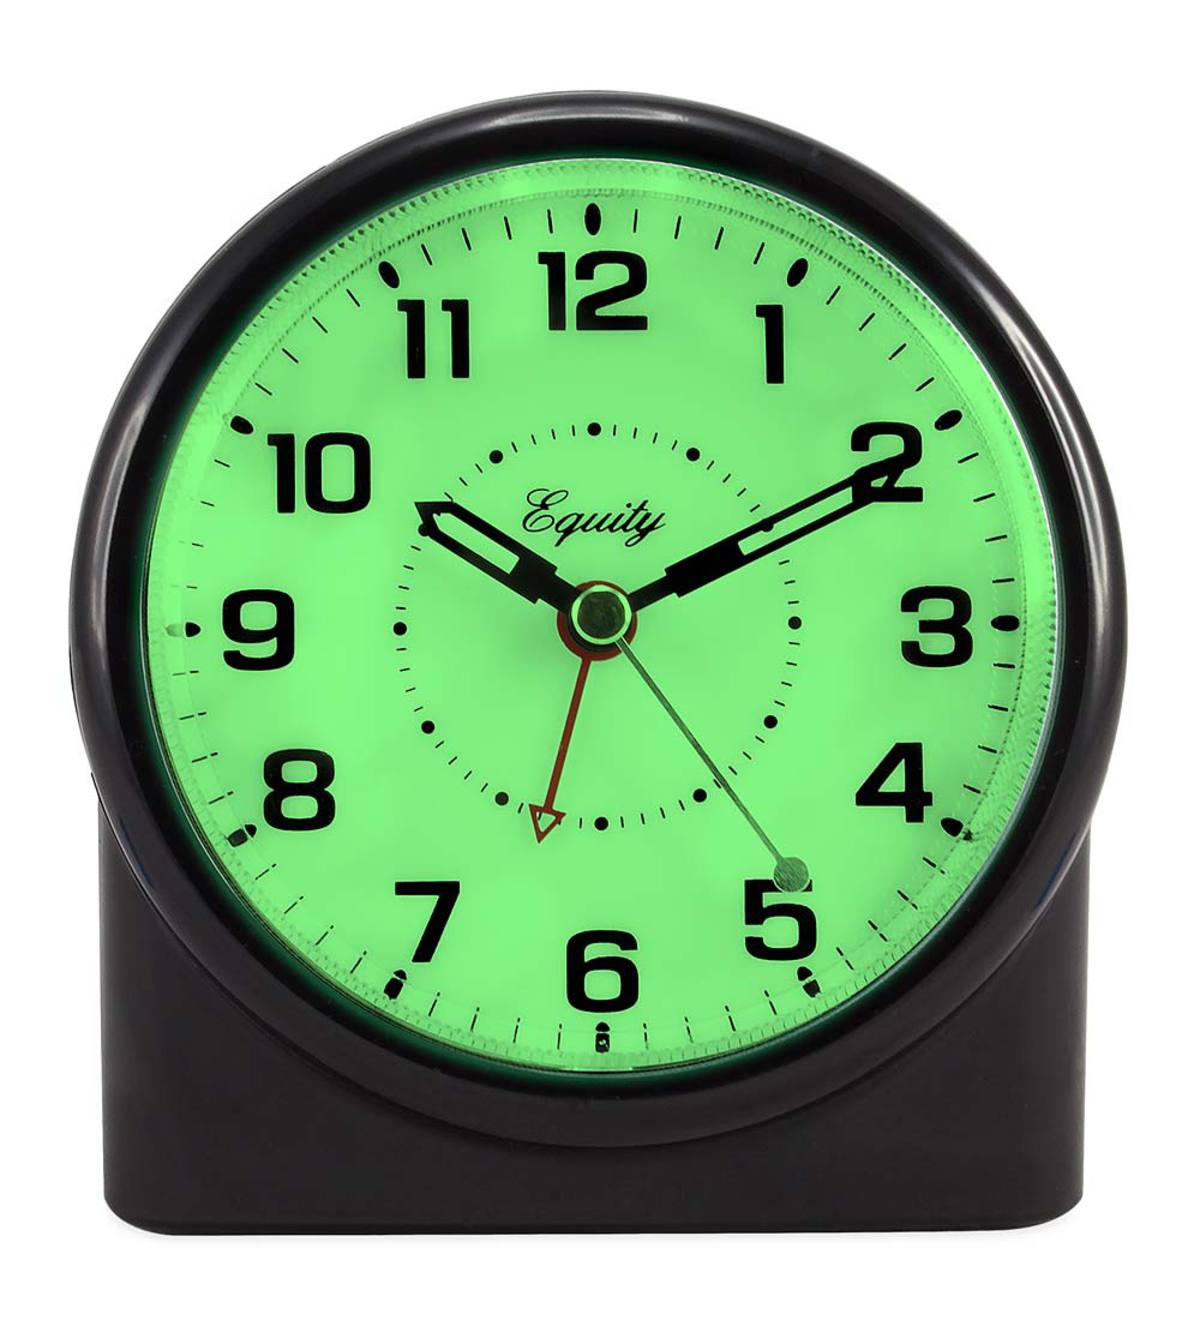 Backlit Analog Alarm Clock